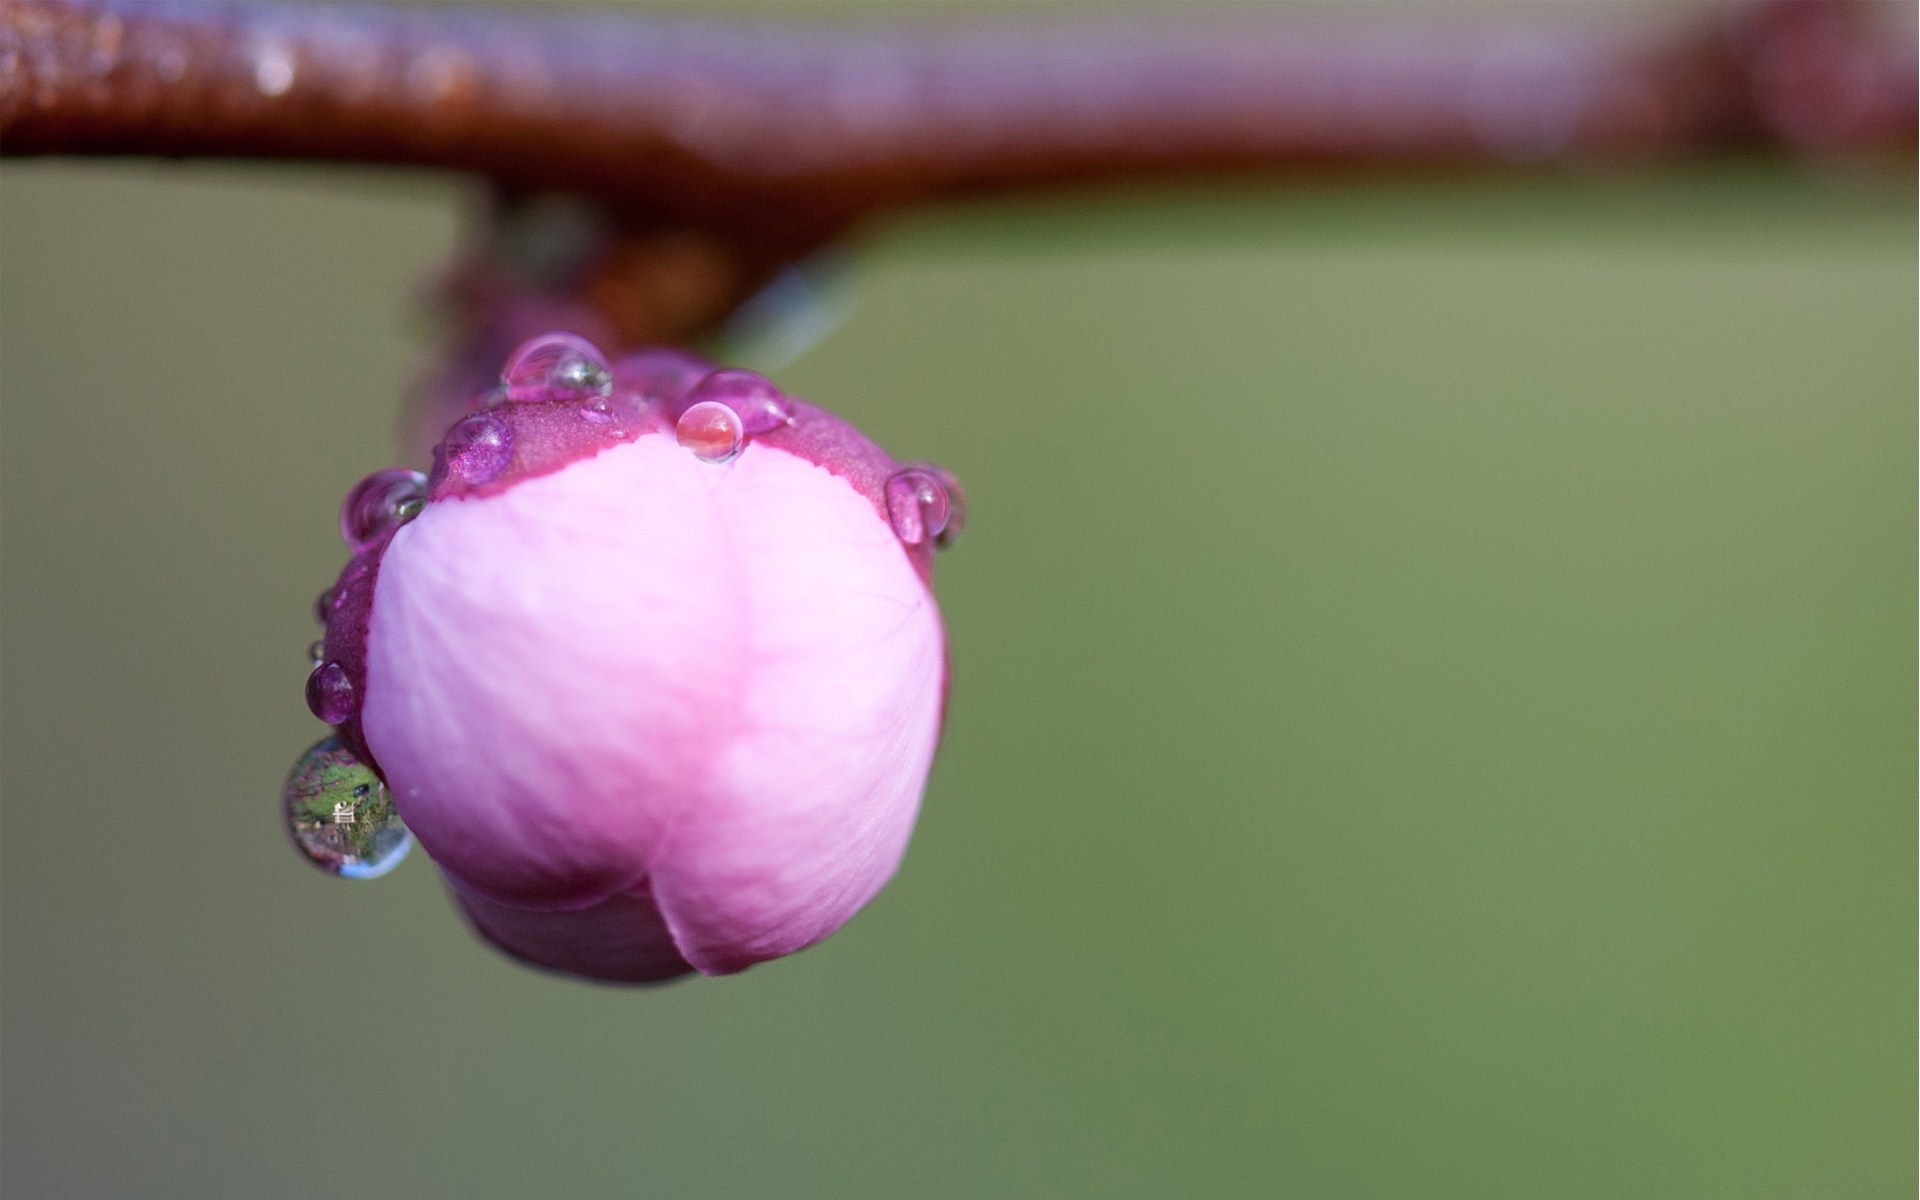 close up bud cherry flower